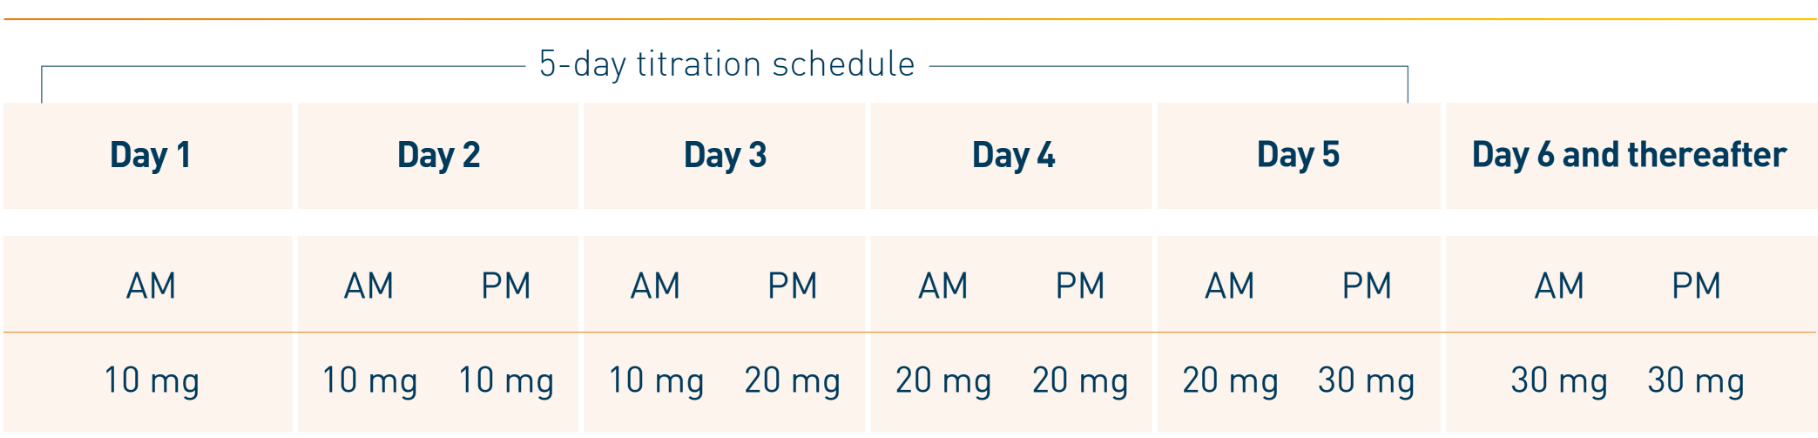 Otezla 5-day dosing titration schedule